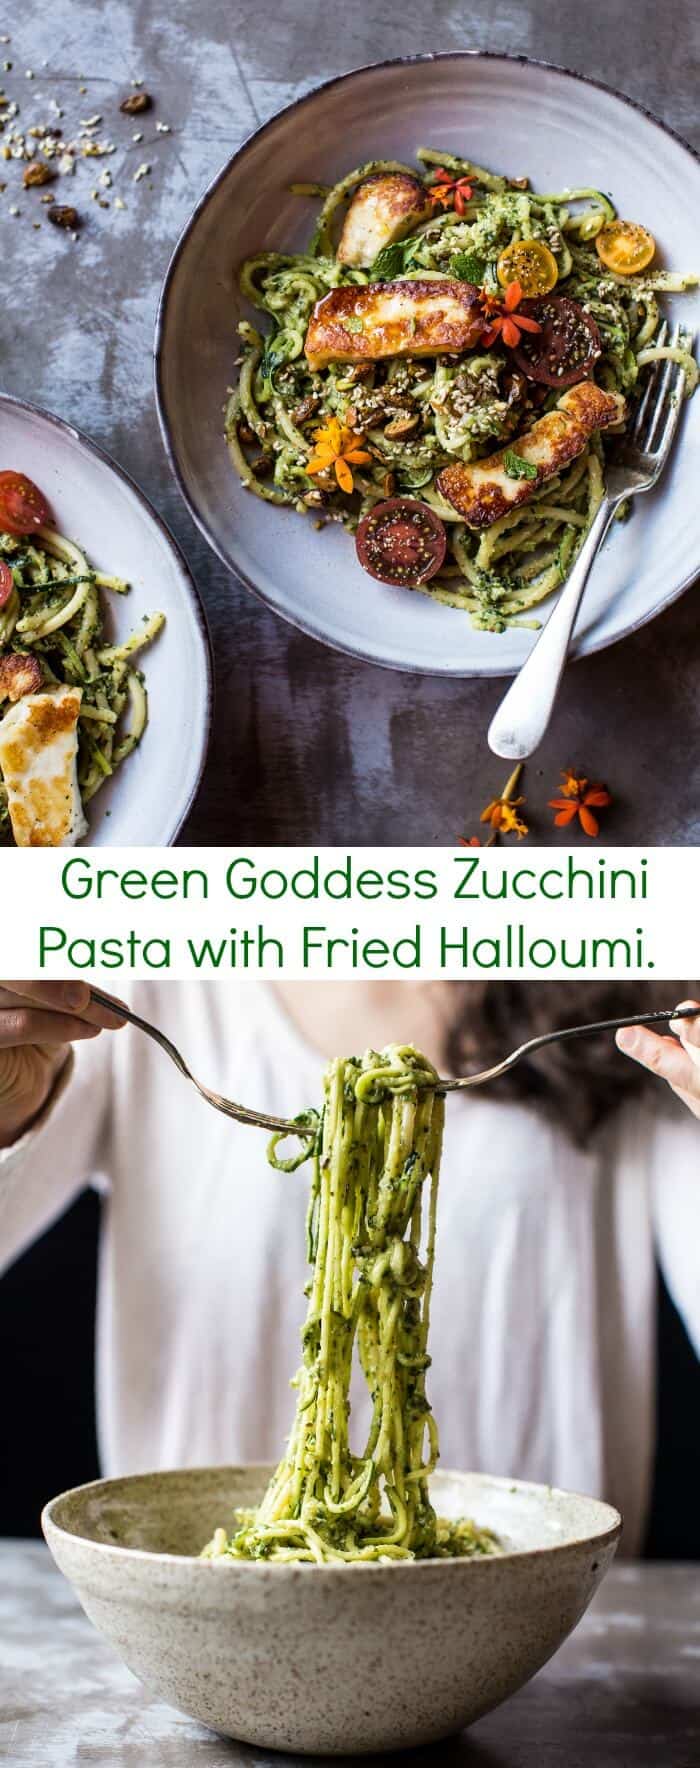 Green Goddess Zucchini Pasta with Fried Halloumi | halfbakedharvest.com @hbharvest